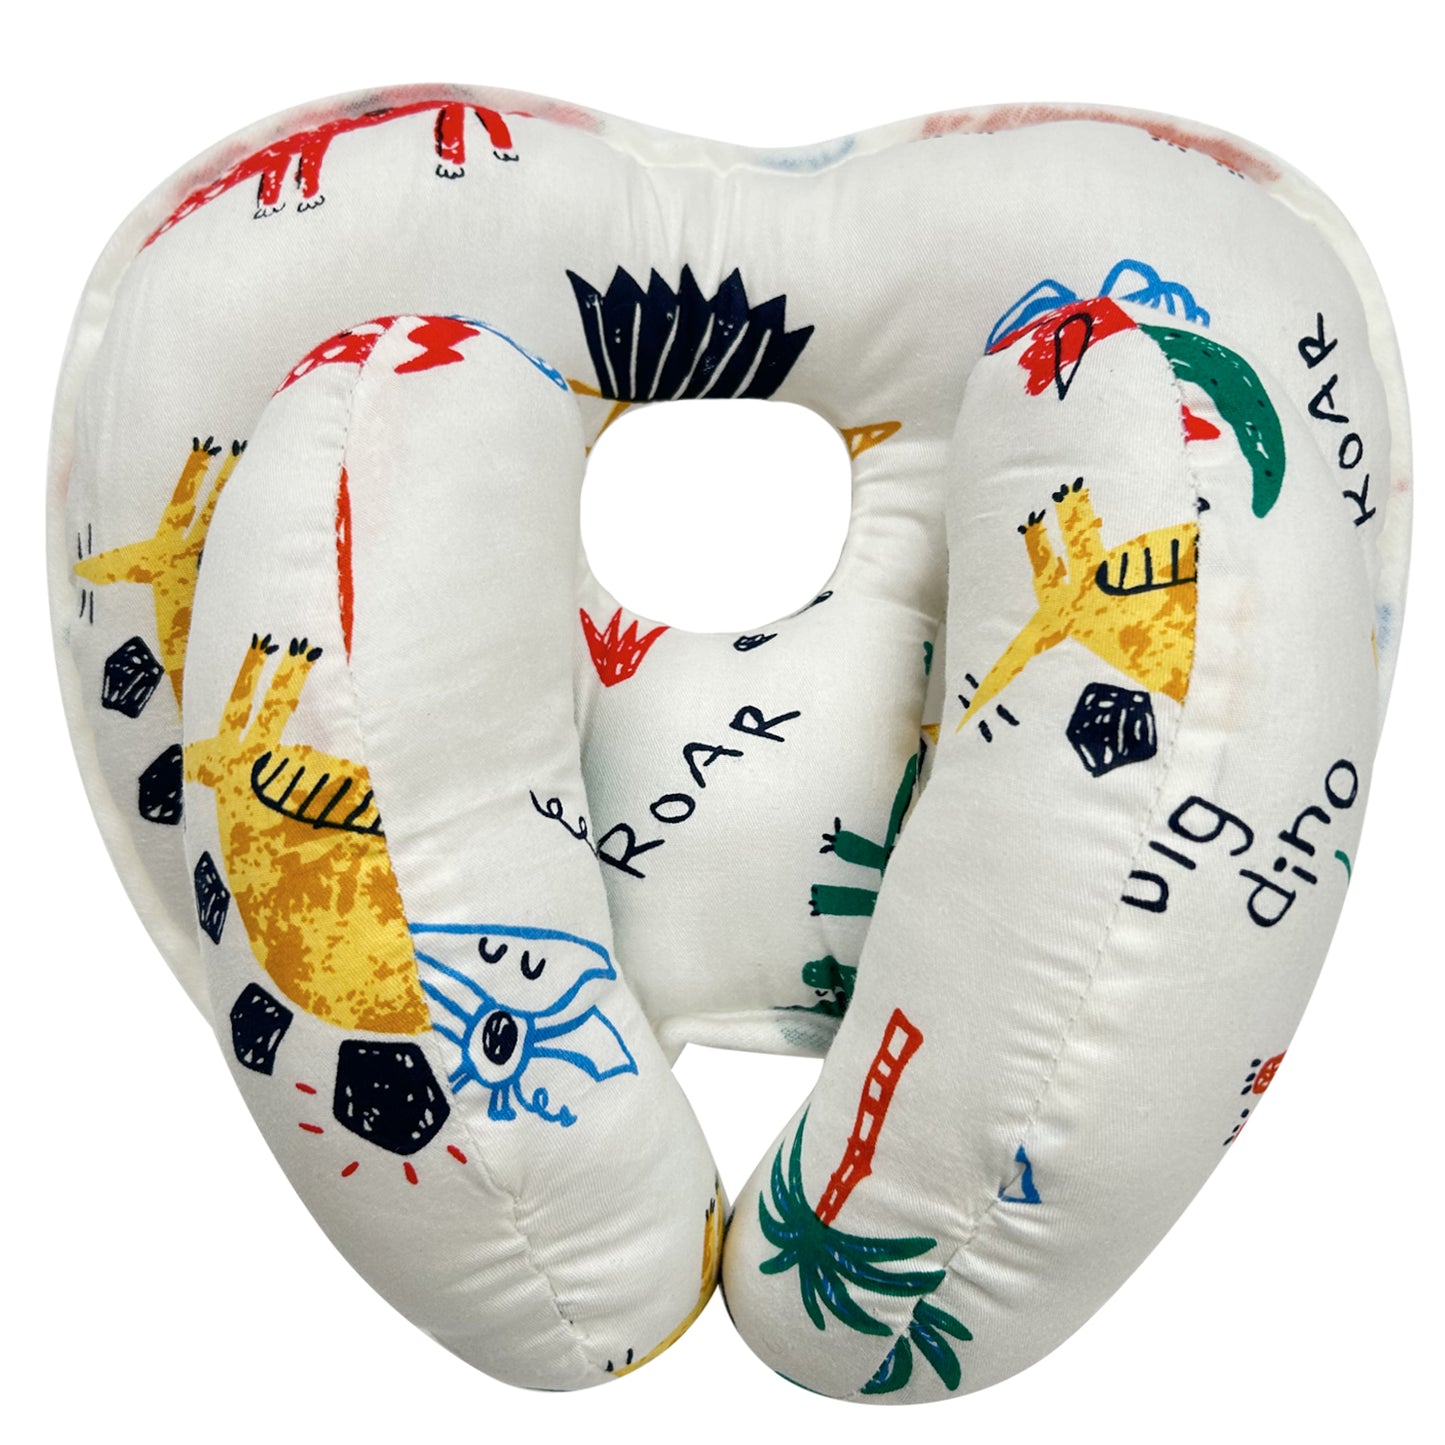 Soft banana shaped washable comfortable sleeping baby pillow